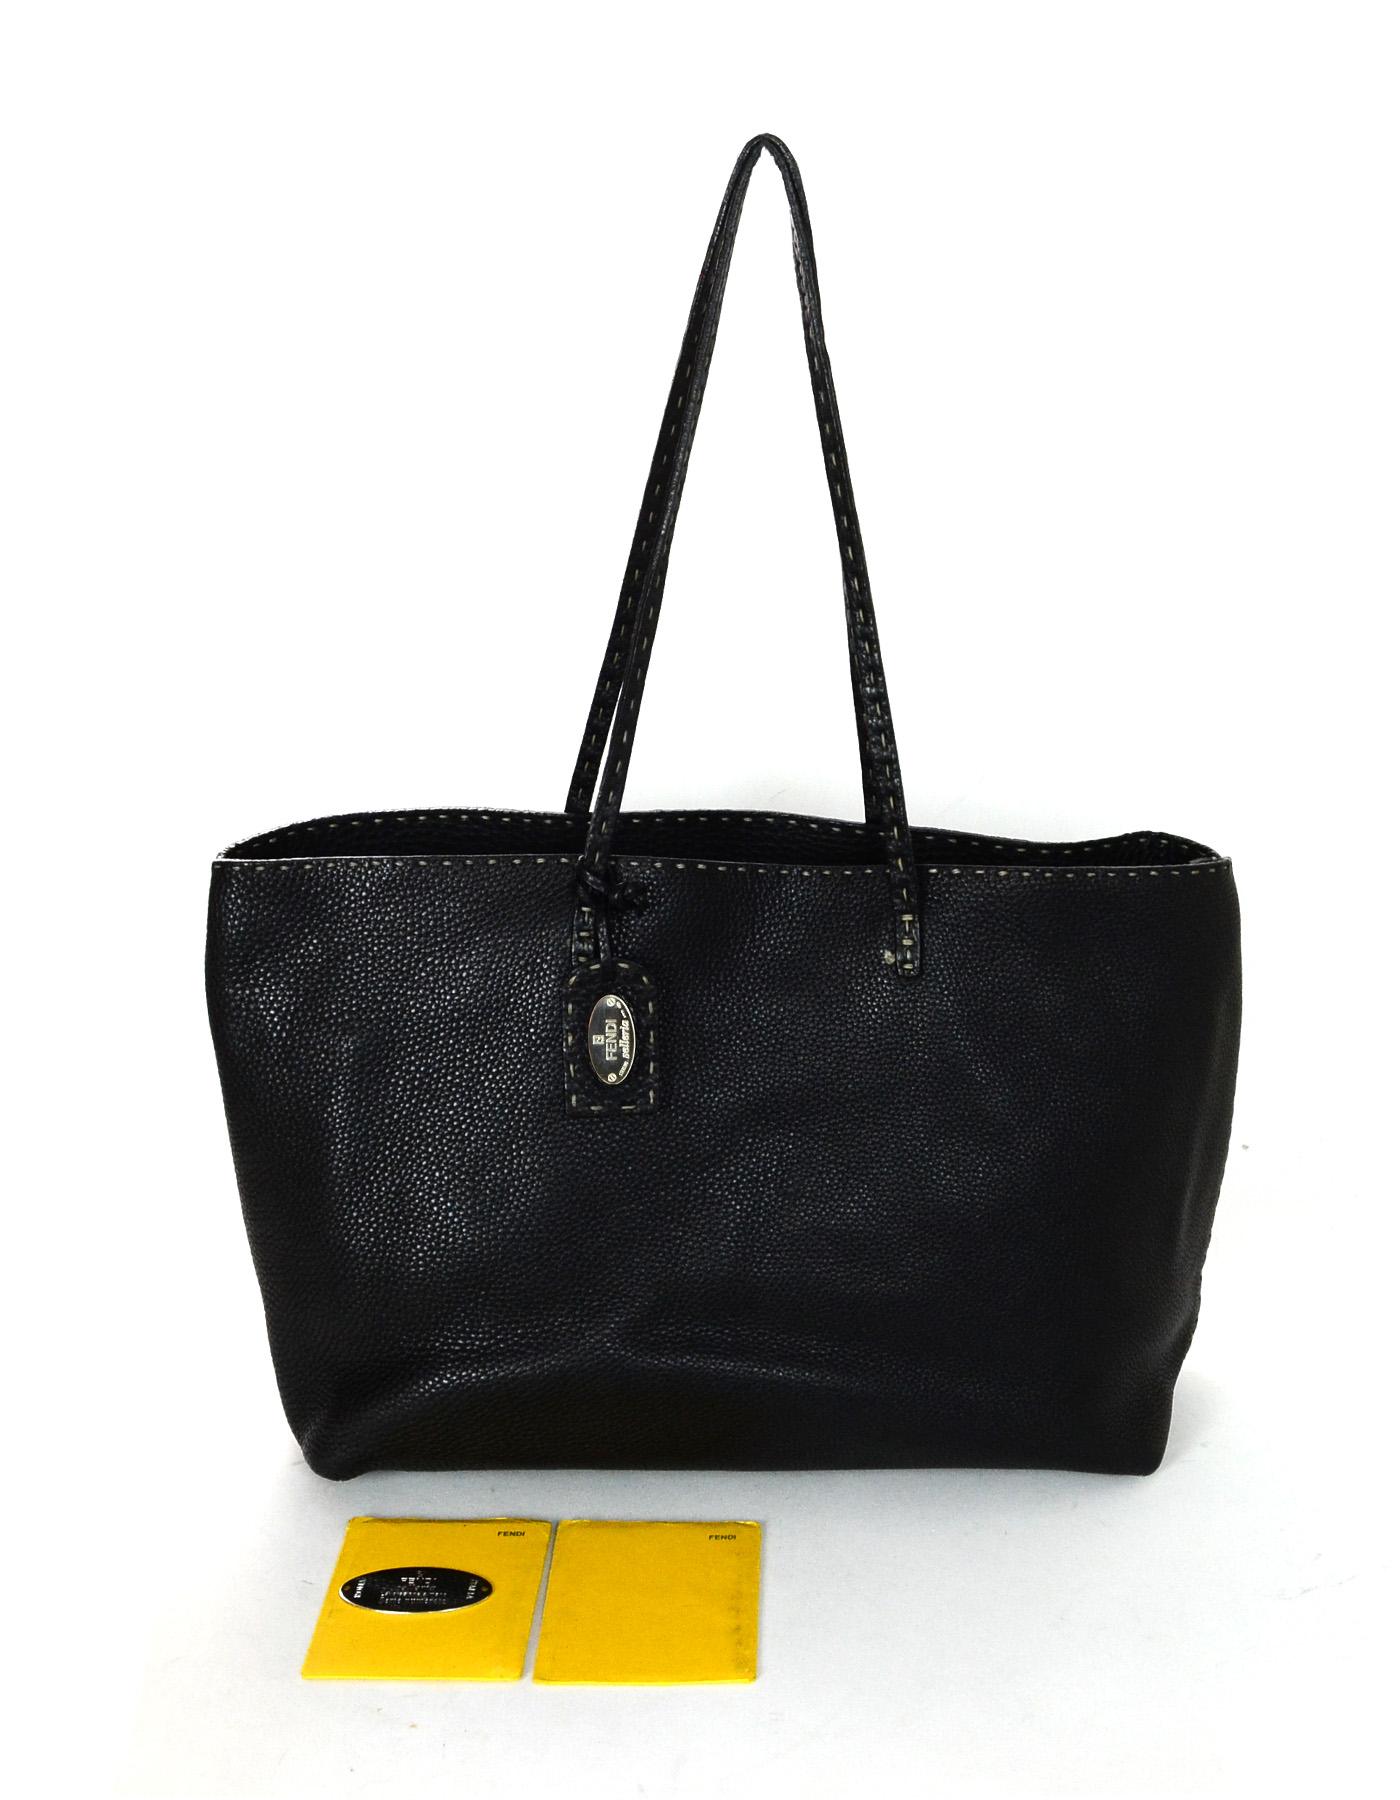 Fendi Black Pebbled Leather Selleria Tote Bag w/ Contrast Stitching 5